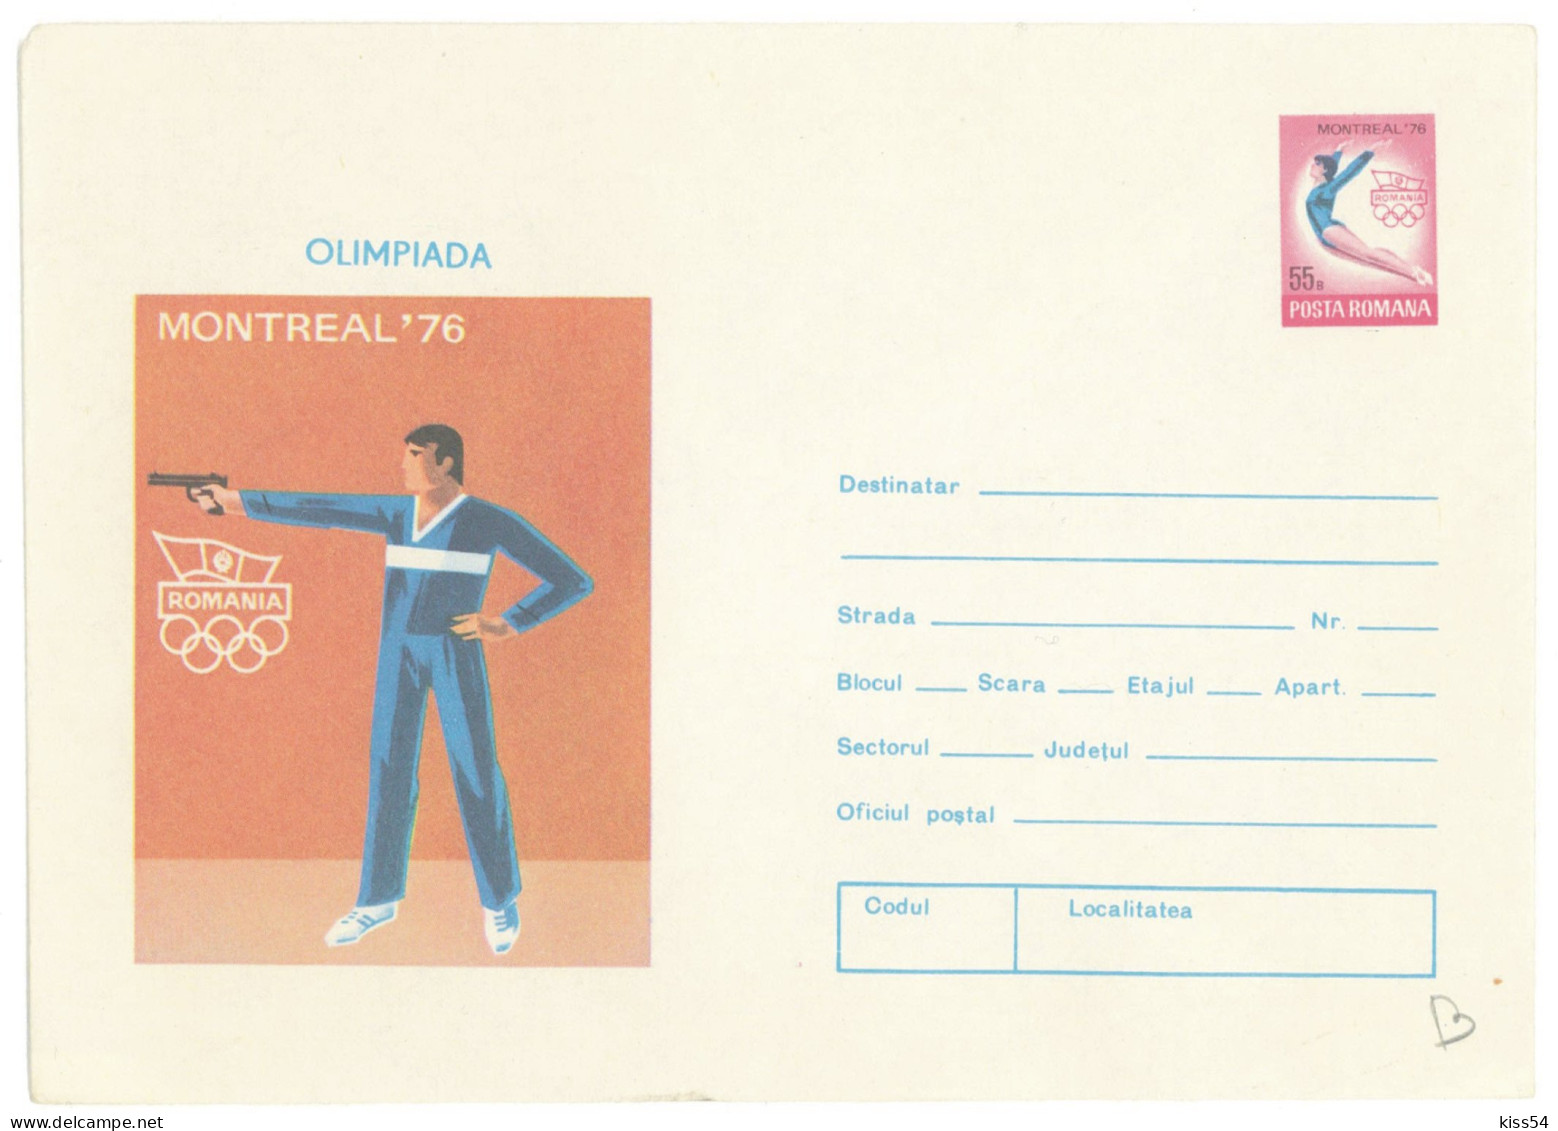 IP 76 - 128 SHOOT, GYMNASTICS, OLIMPIC GAMES, Montreal, Romania - Stationery - Unused - 1976 - Postal Stationery